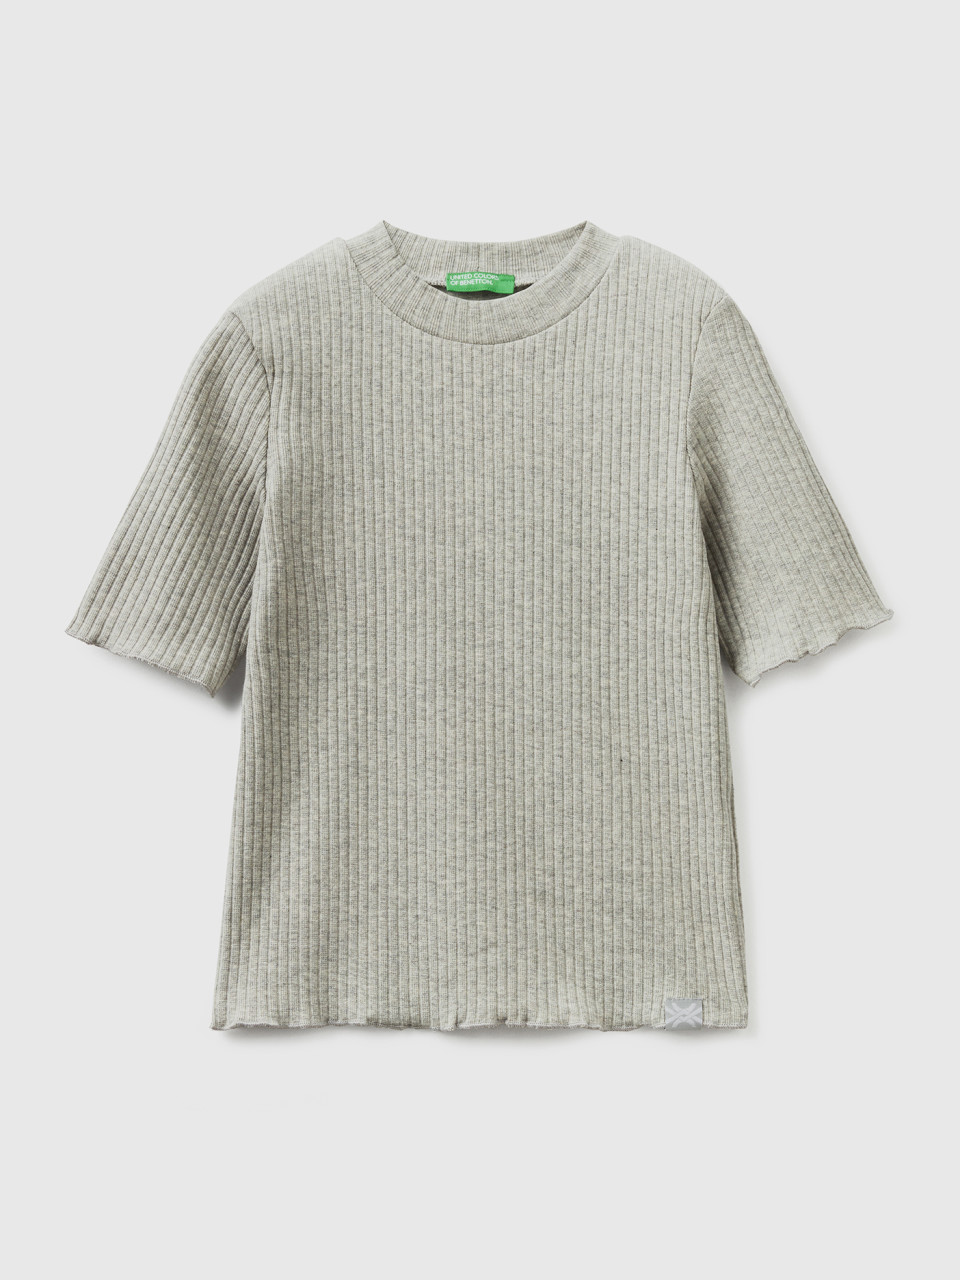 Benetton, Short Sleeve Turtleneck T-shirt, Light Gray, Kids